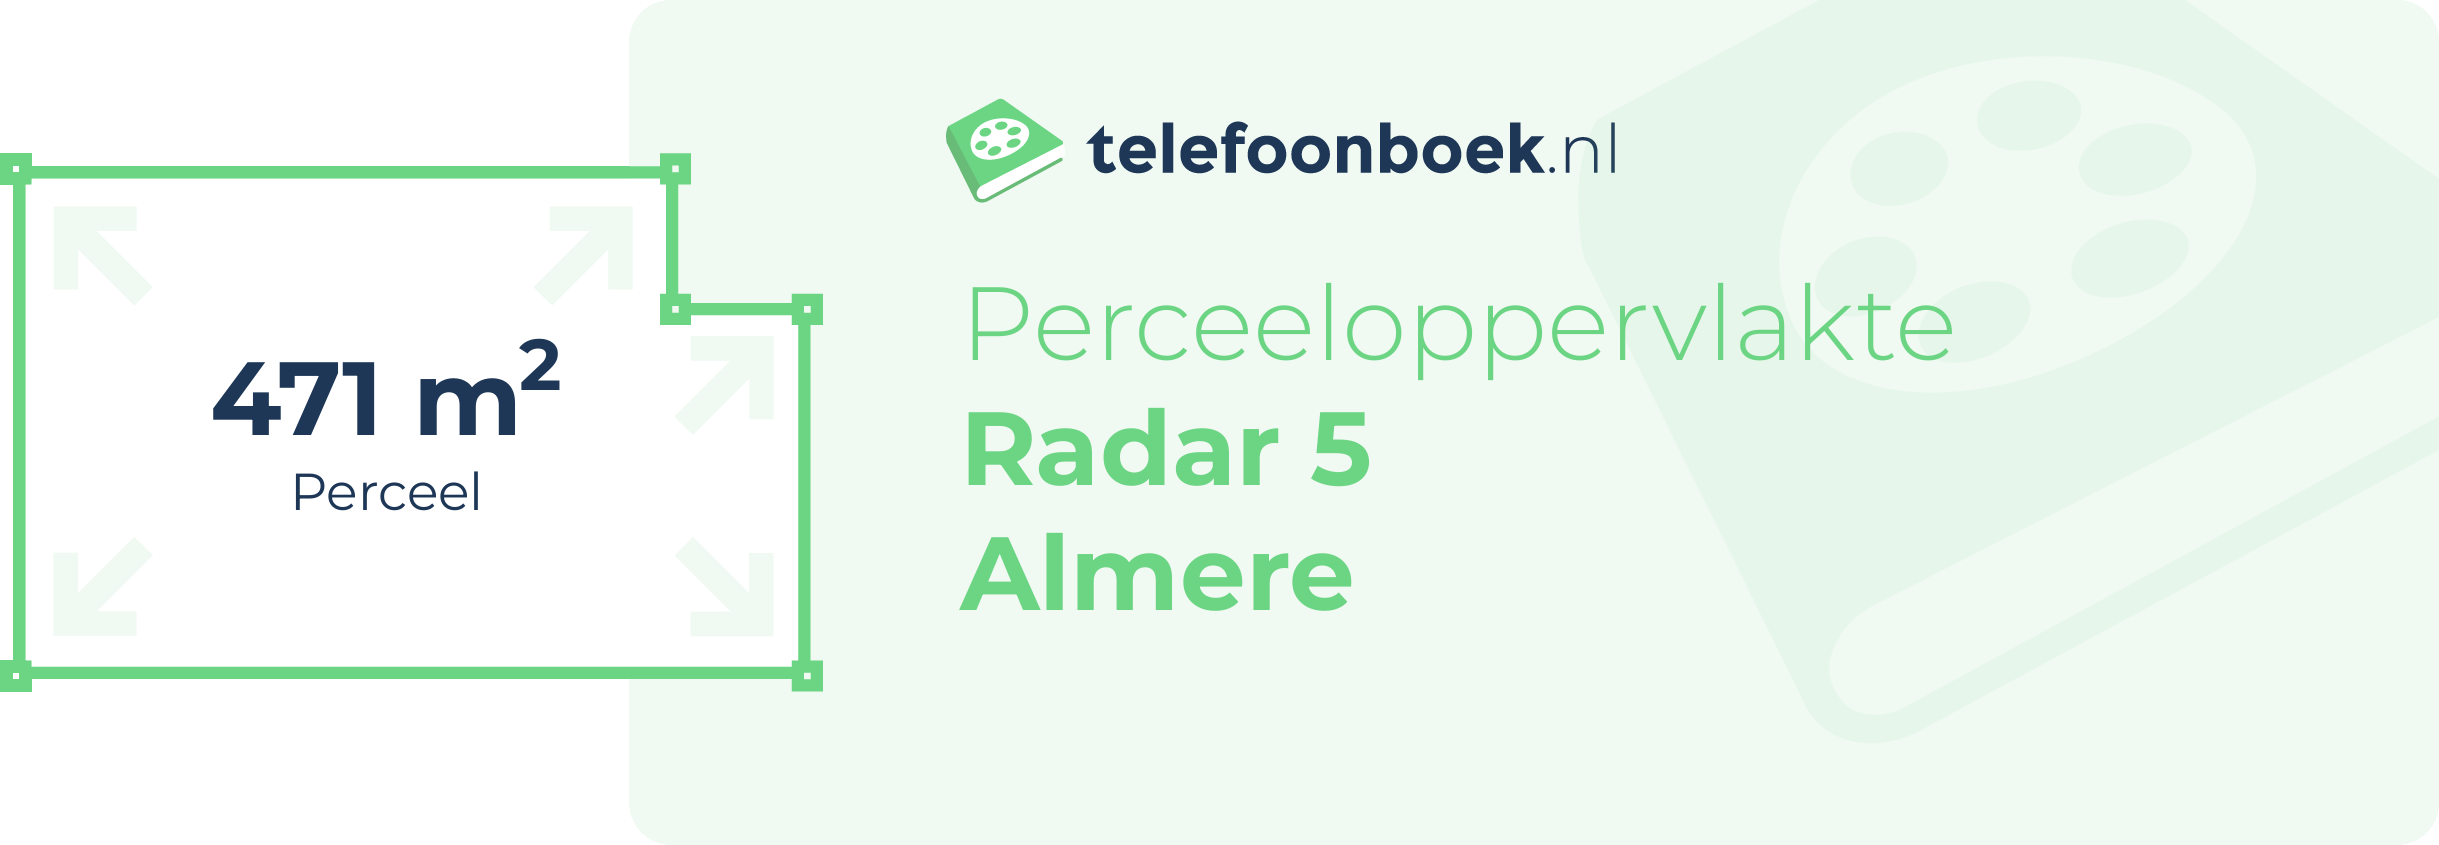 Perceeloppervlakte Radar 5 Almere